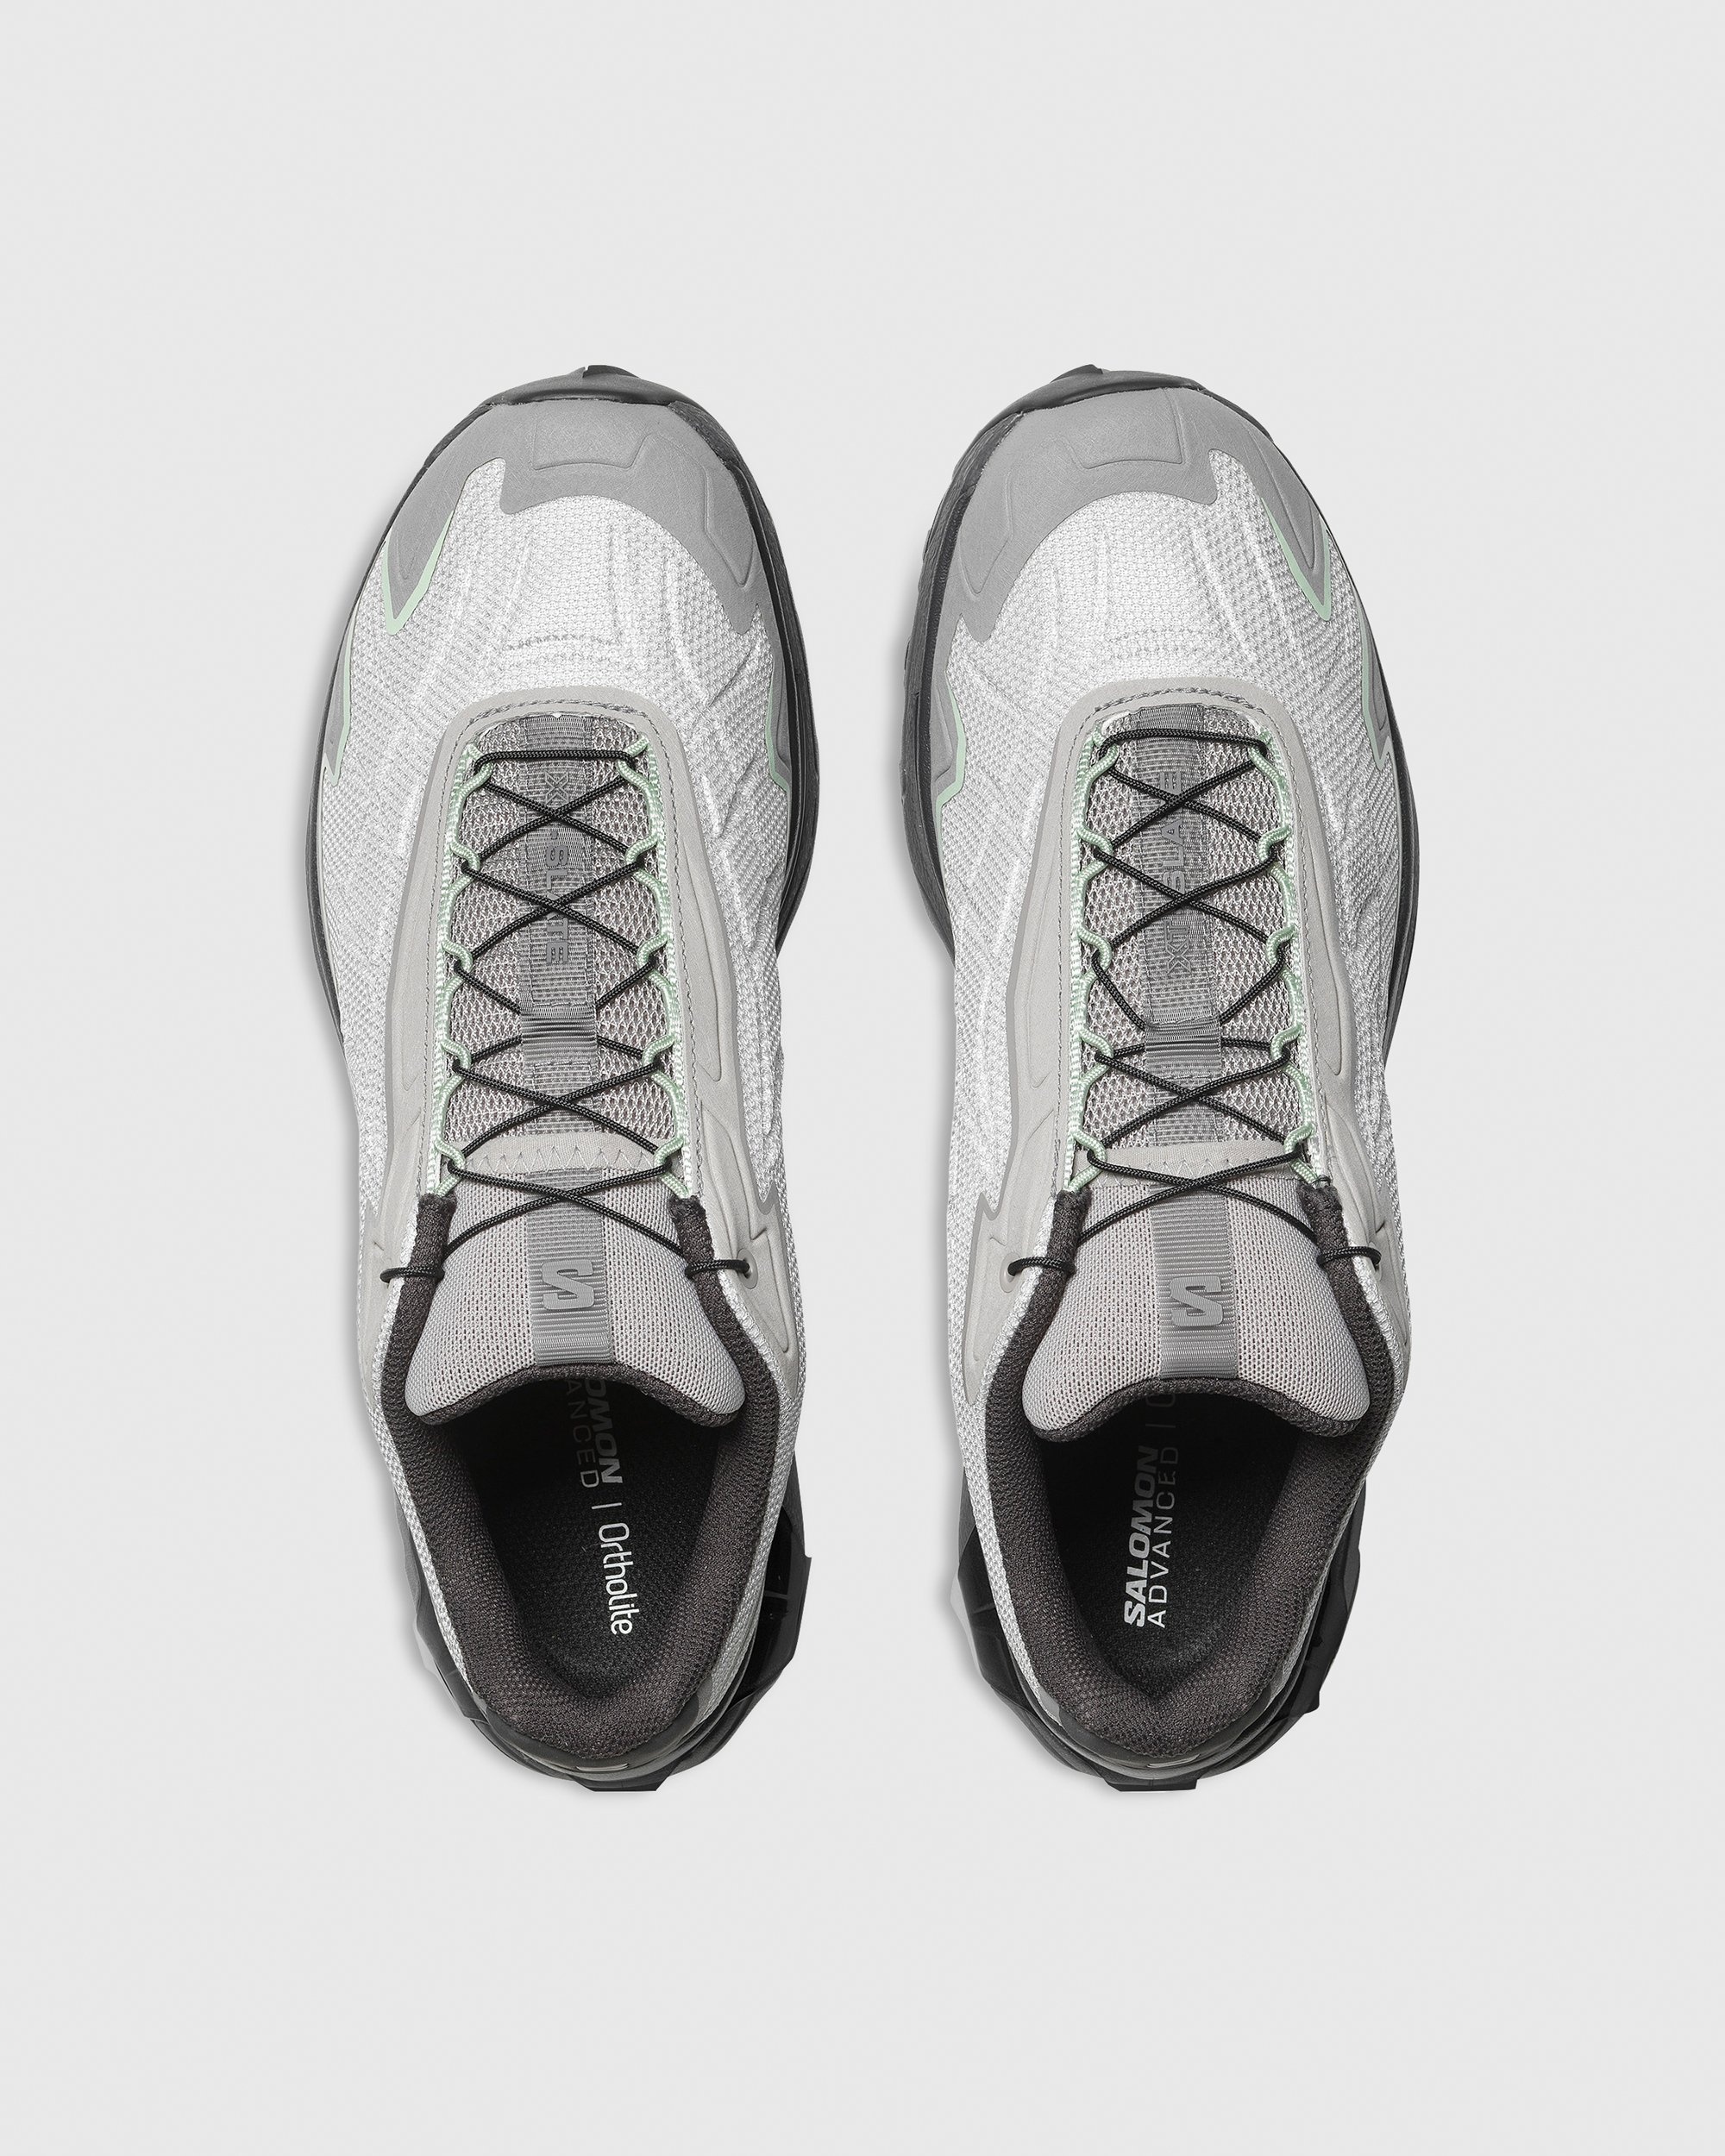 Salomon – XT-Slate Advanced Metal/Gray Flannel/Cameo Green - Sneakers - Grey - Image 3